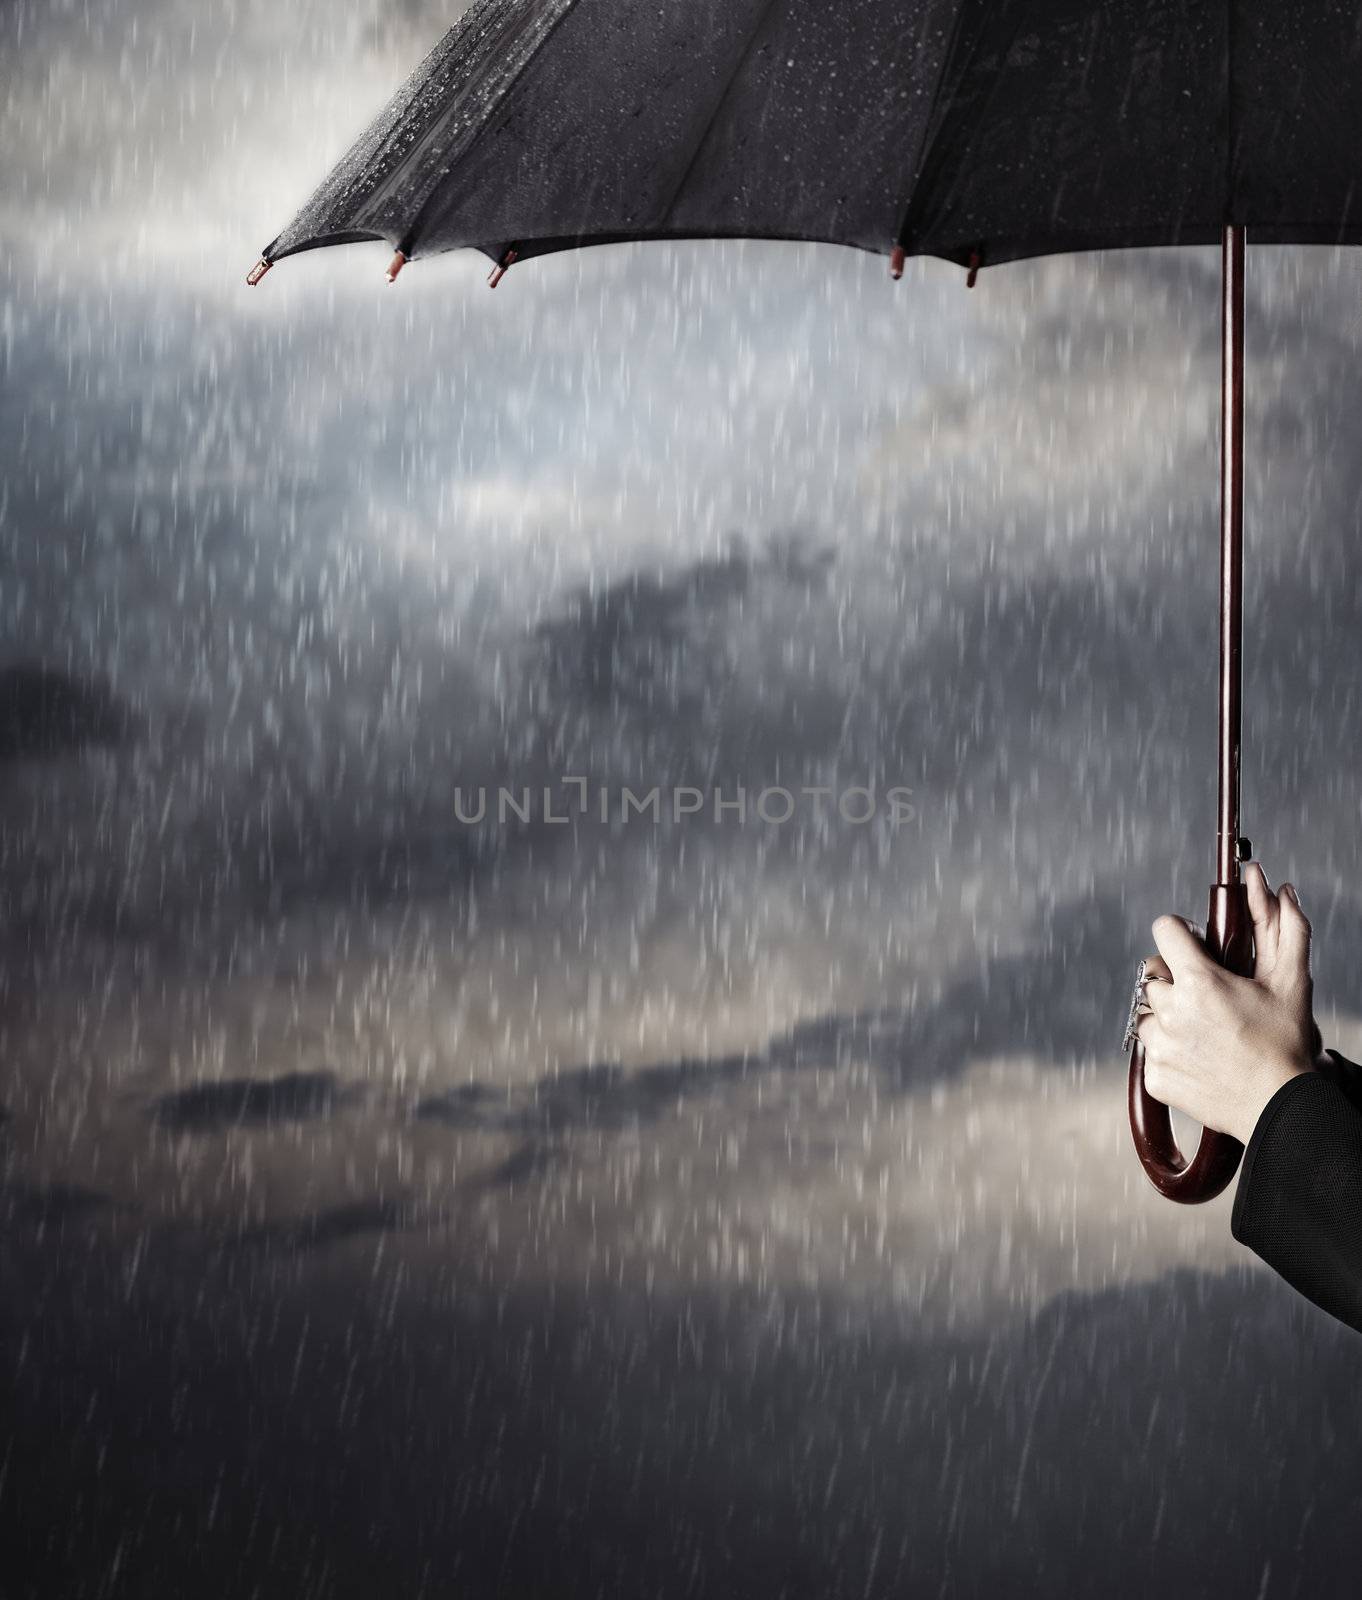 Human hands holding big black umbrella under the heavy rain